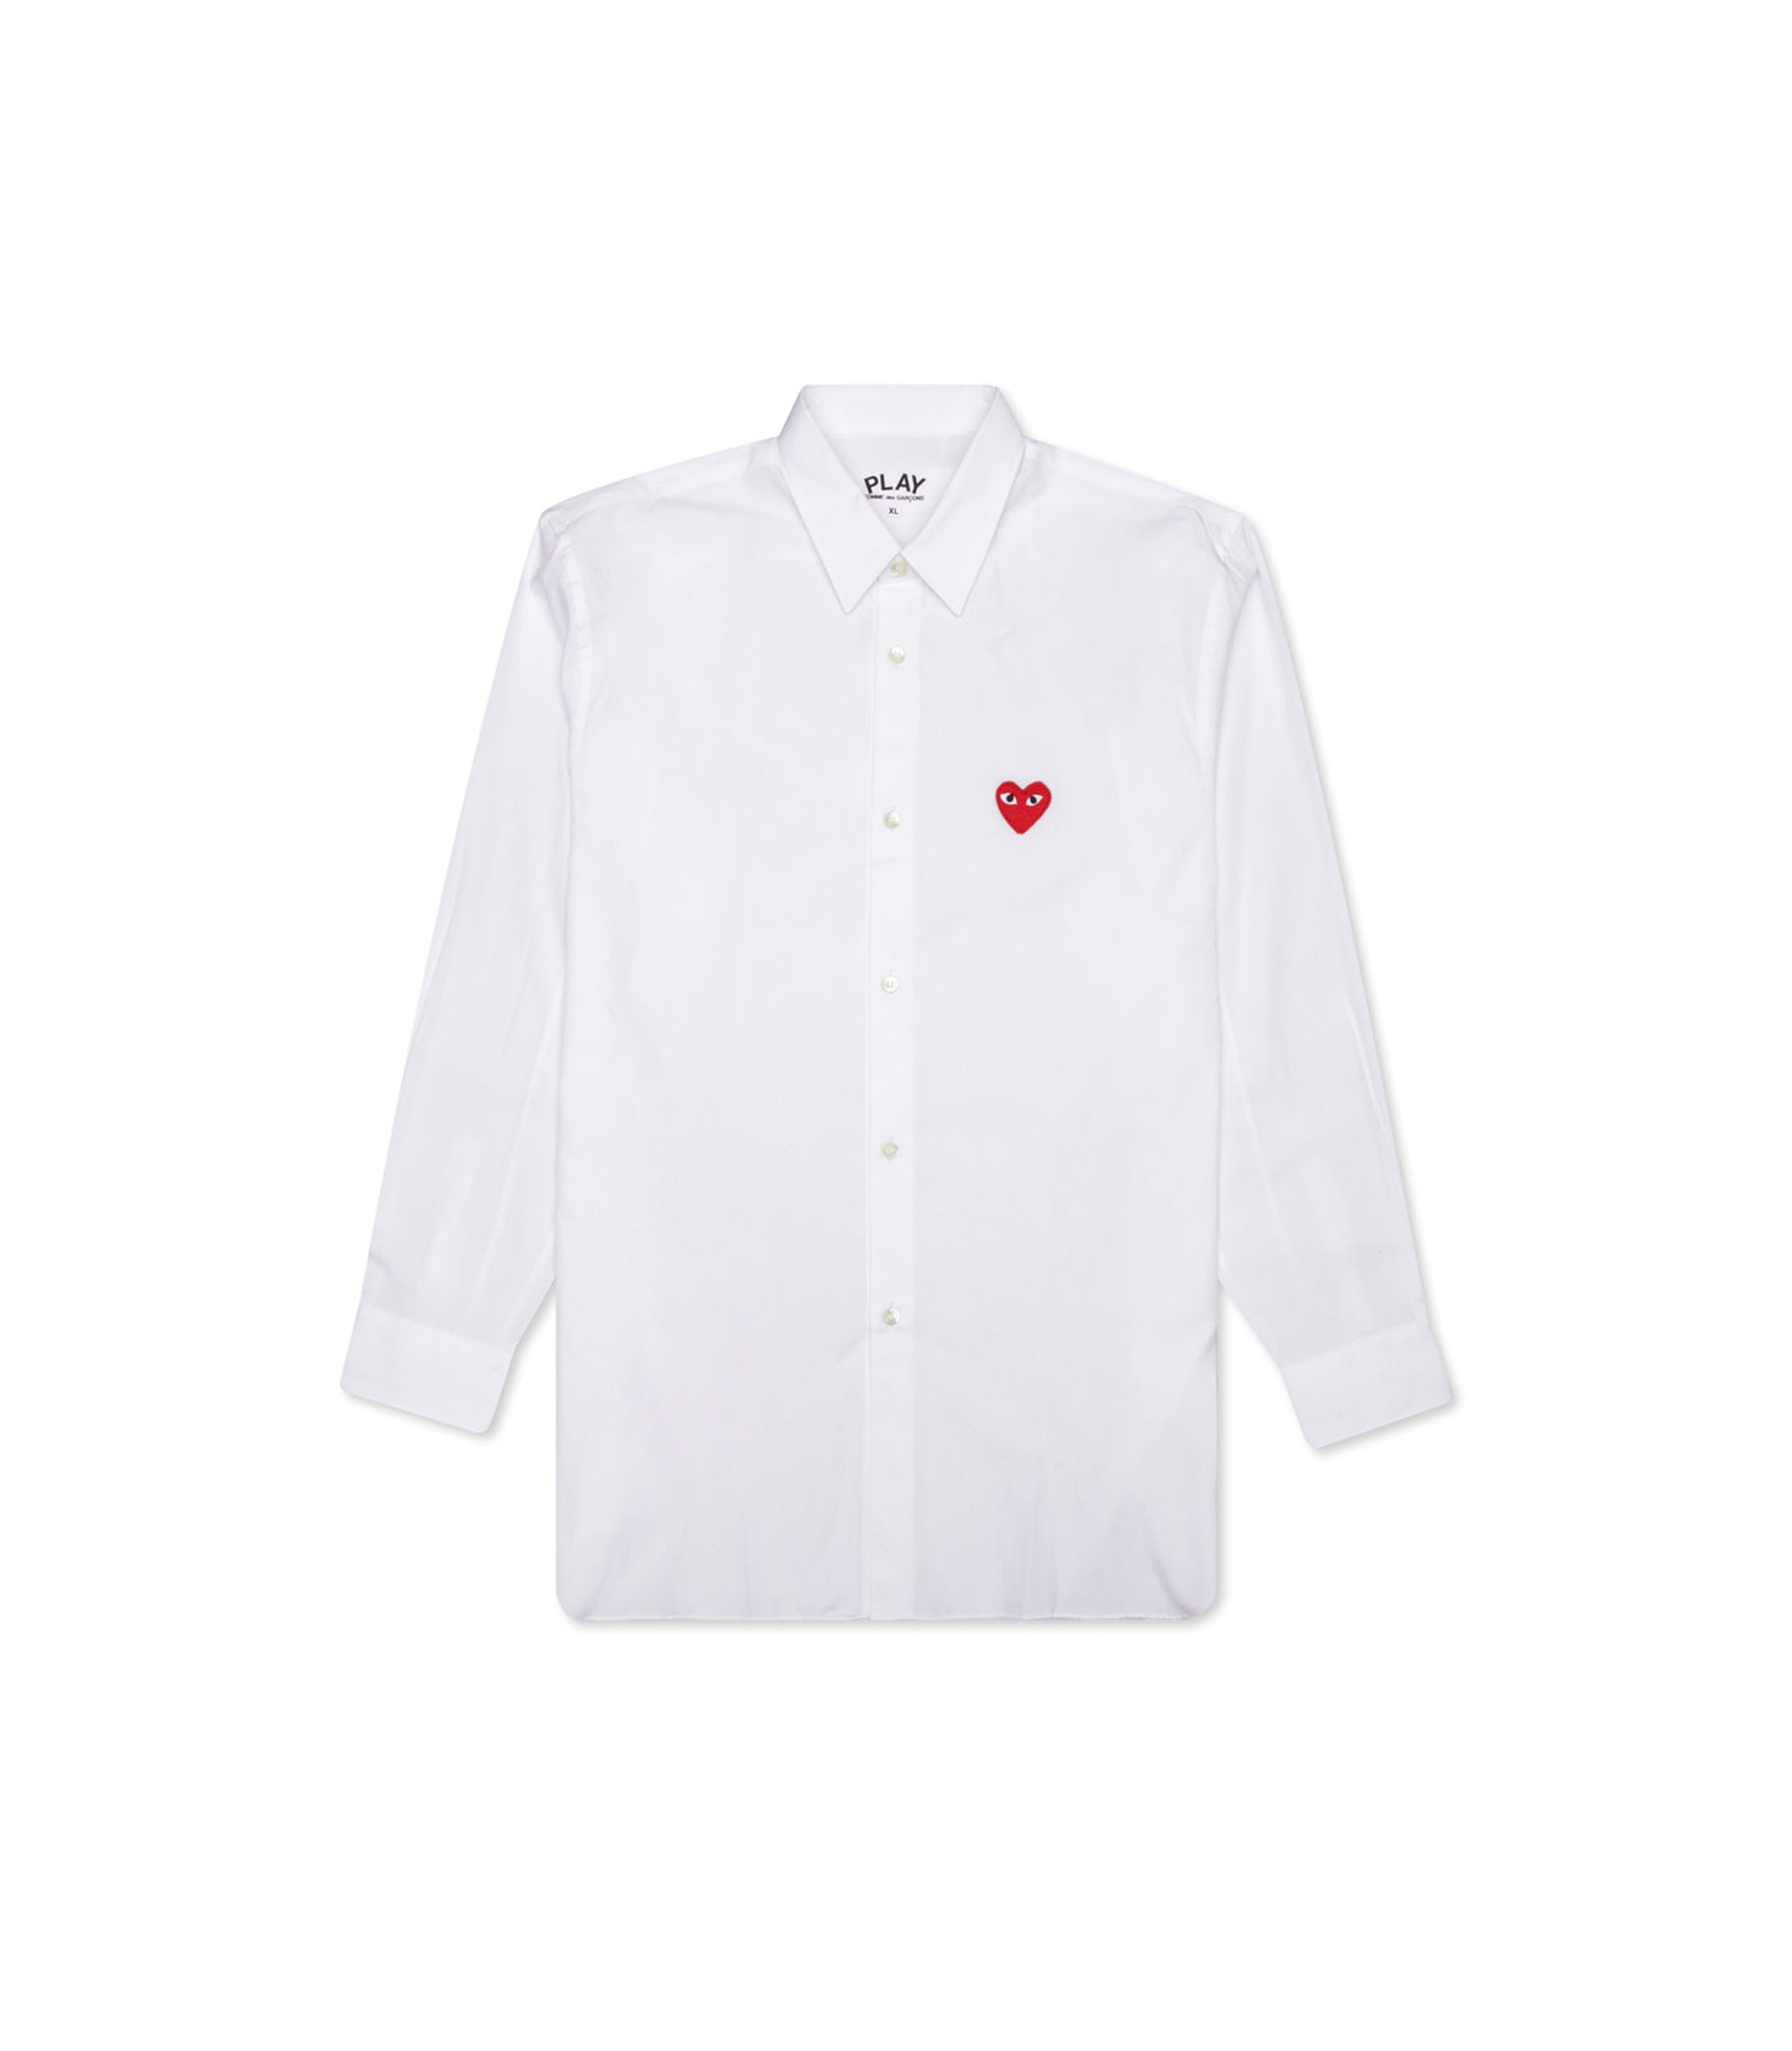 Heart Logo Button Down Shirt - White / Red